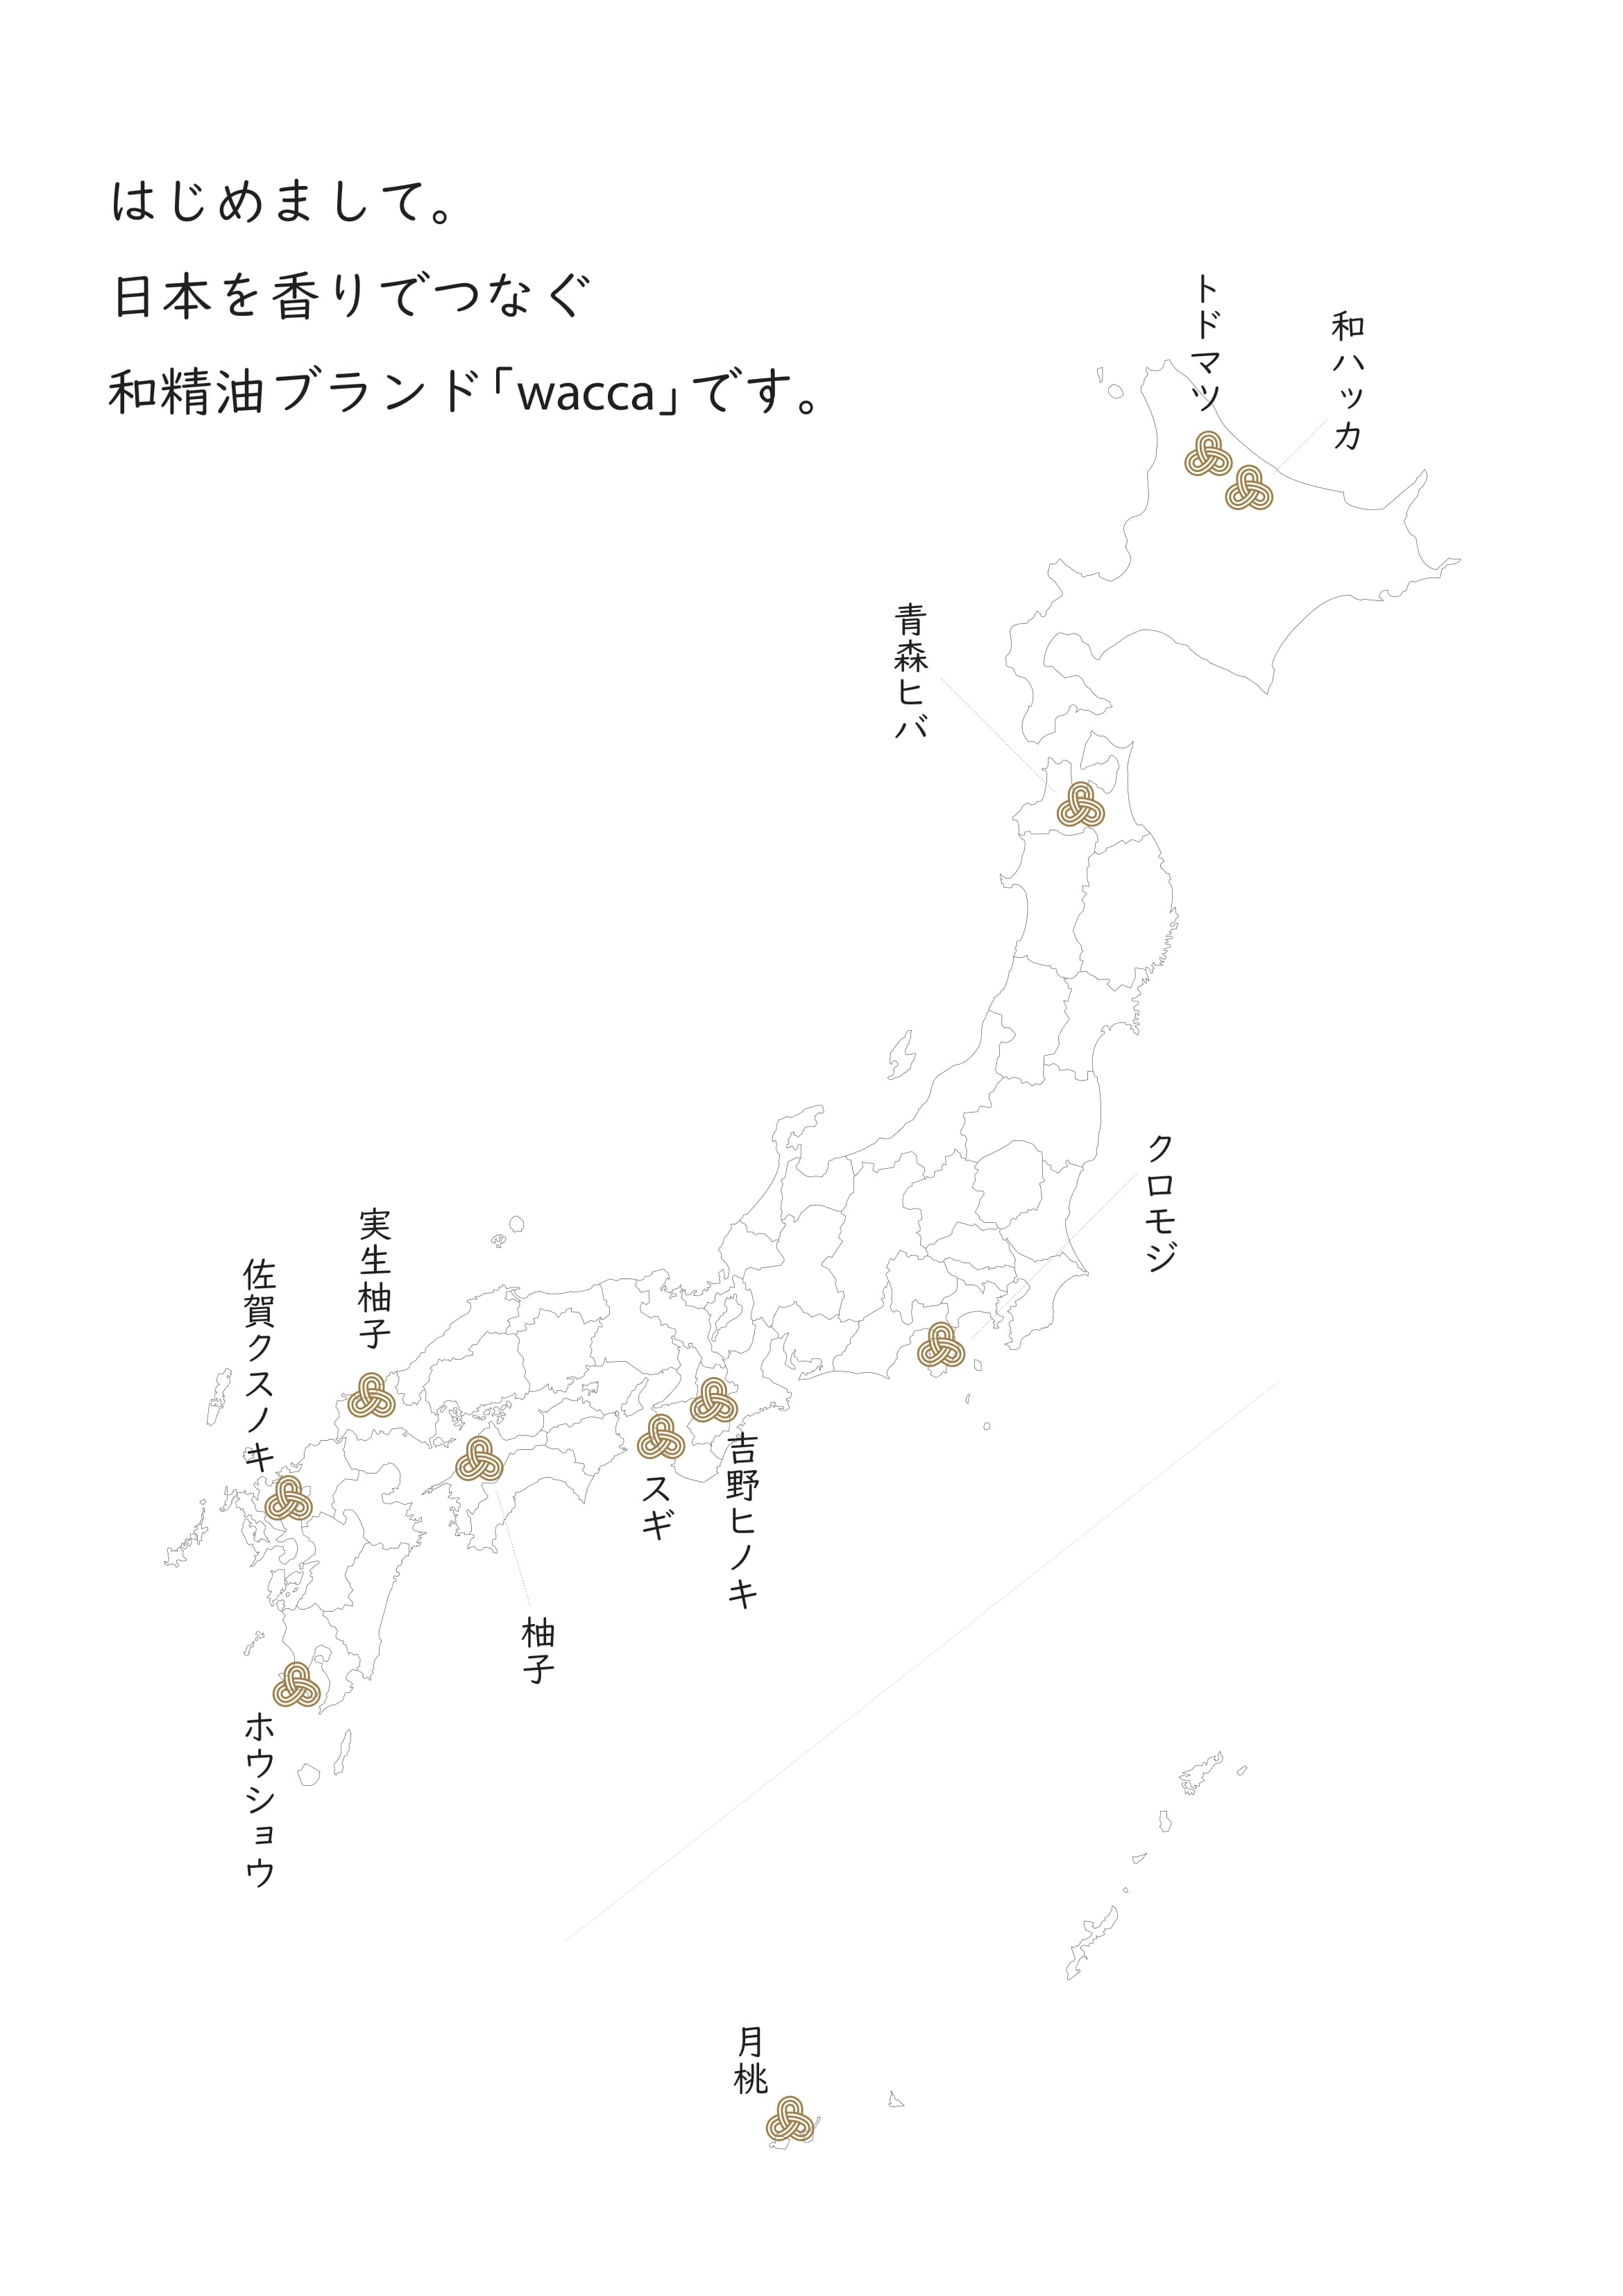 wacca 日本北海道薄荷精油 (最佳使用期: 07/2024)